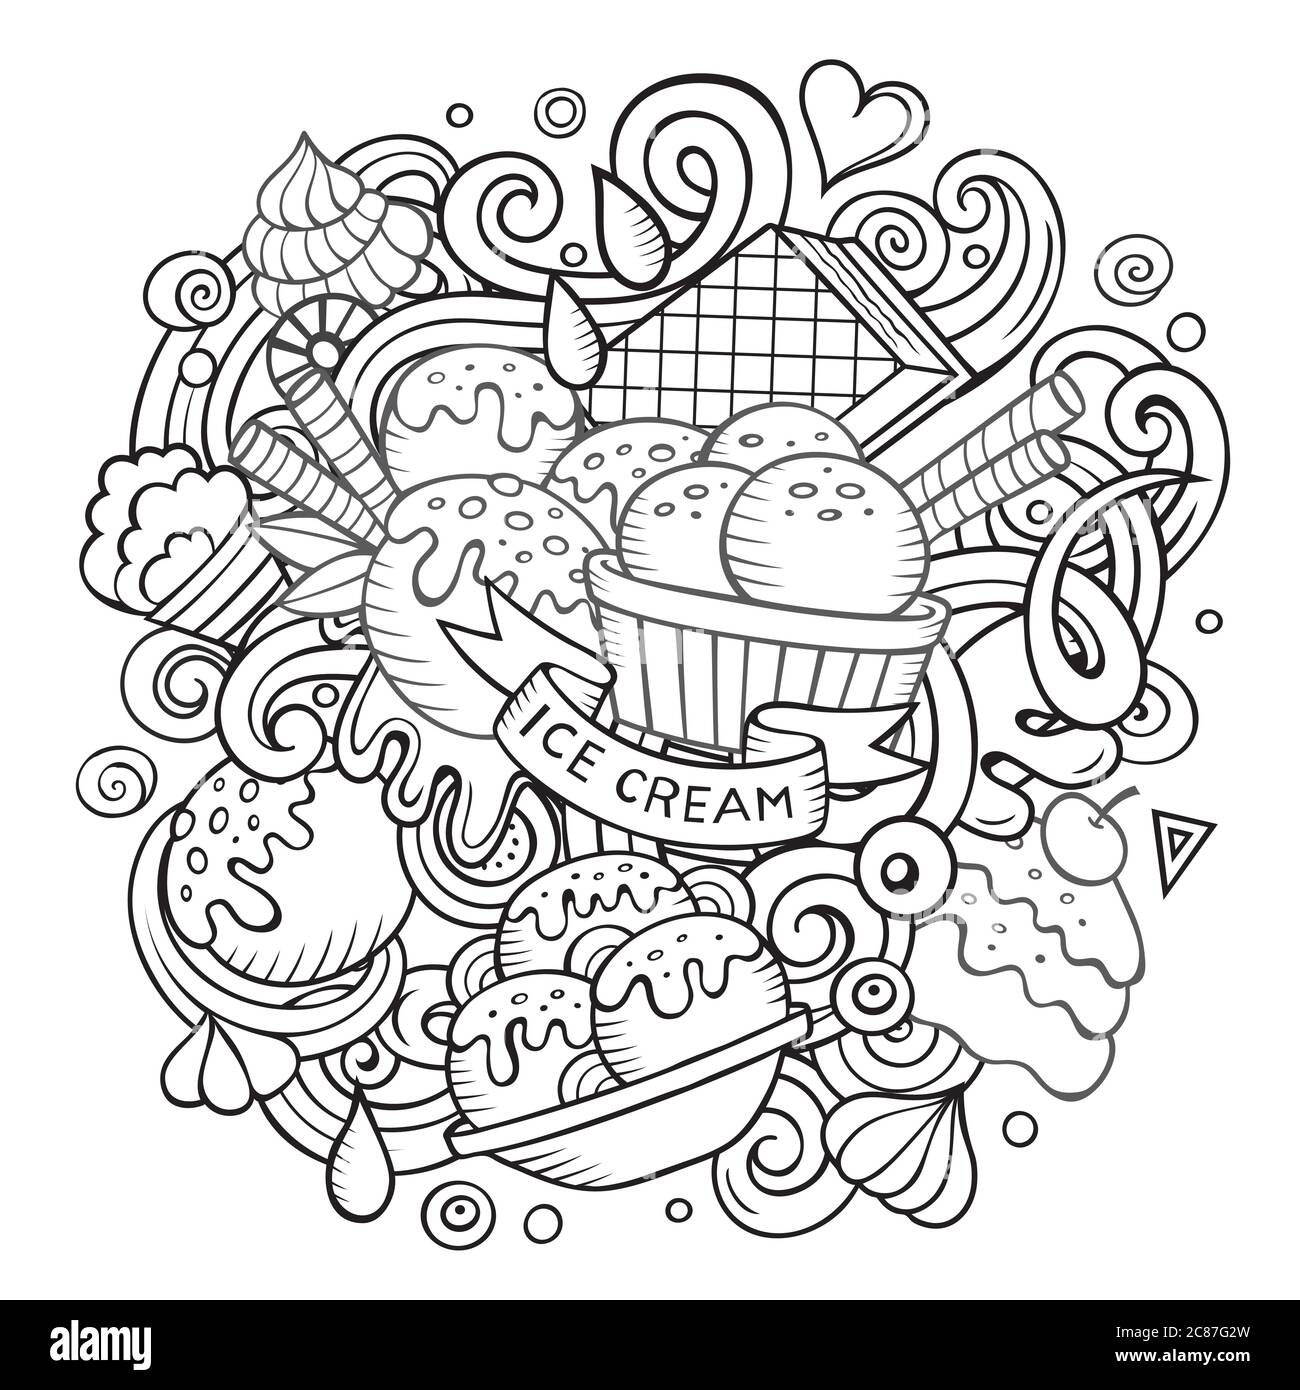 Cartoon hand-drawn doodles Ice Cream illustration Stock Vector Image ...